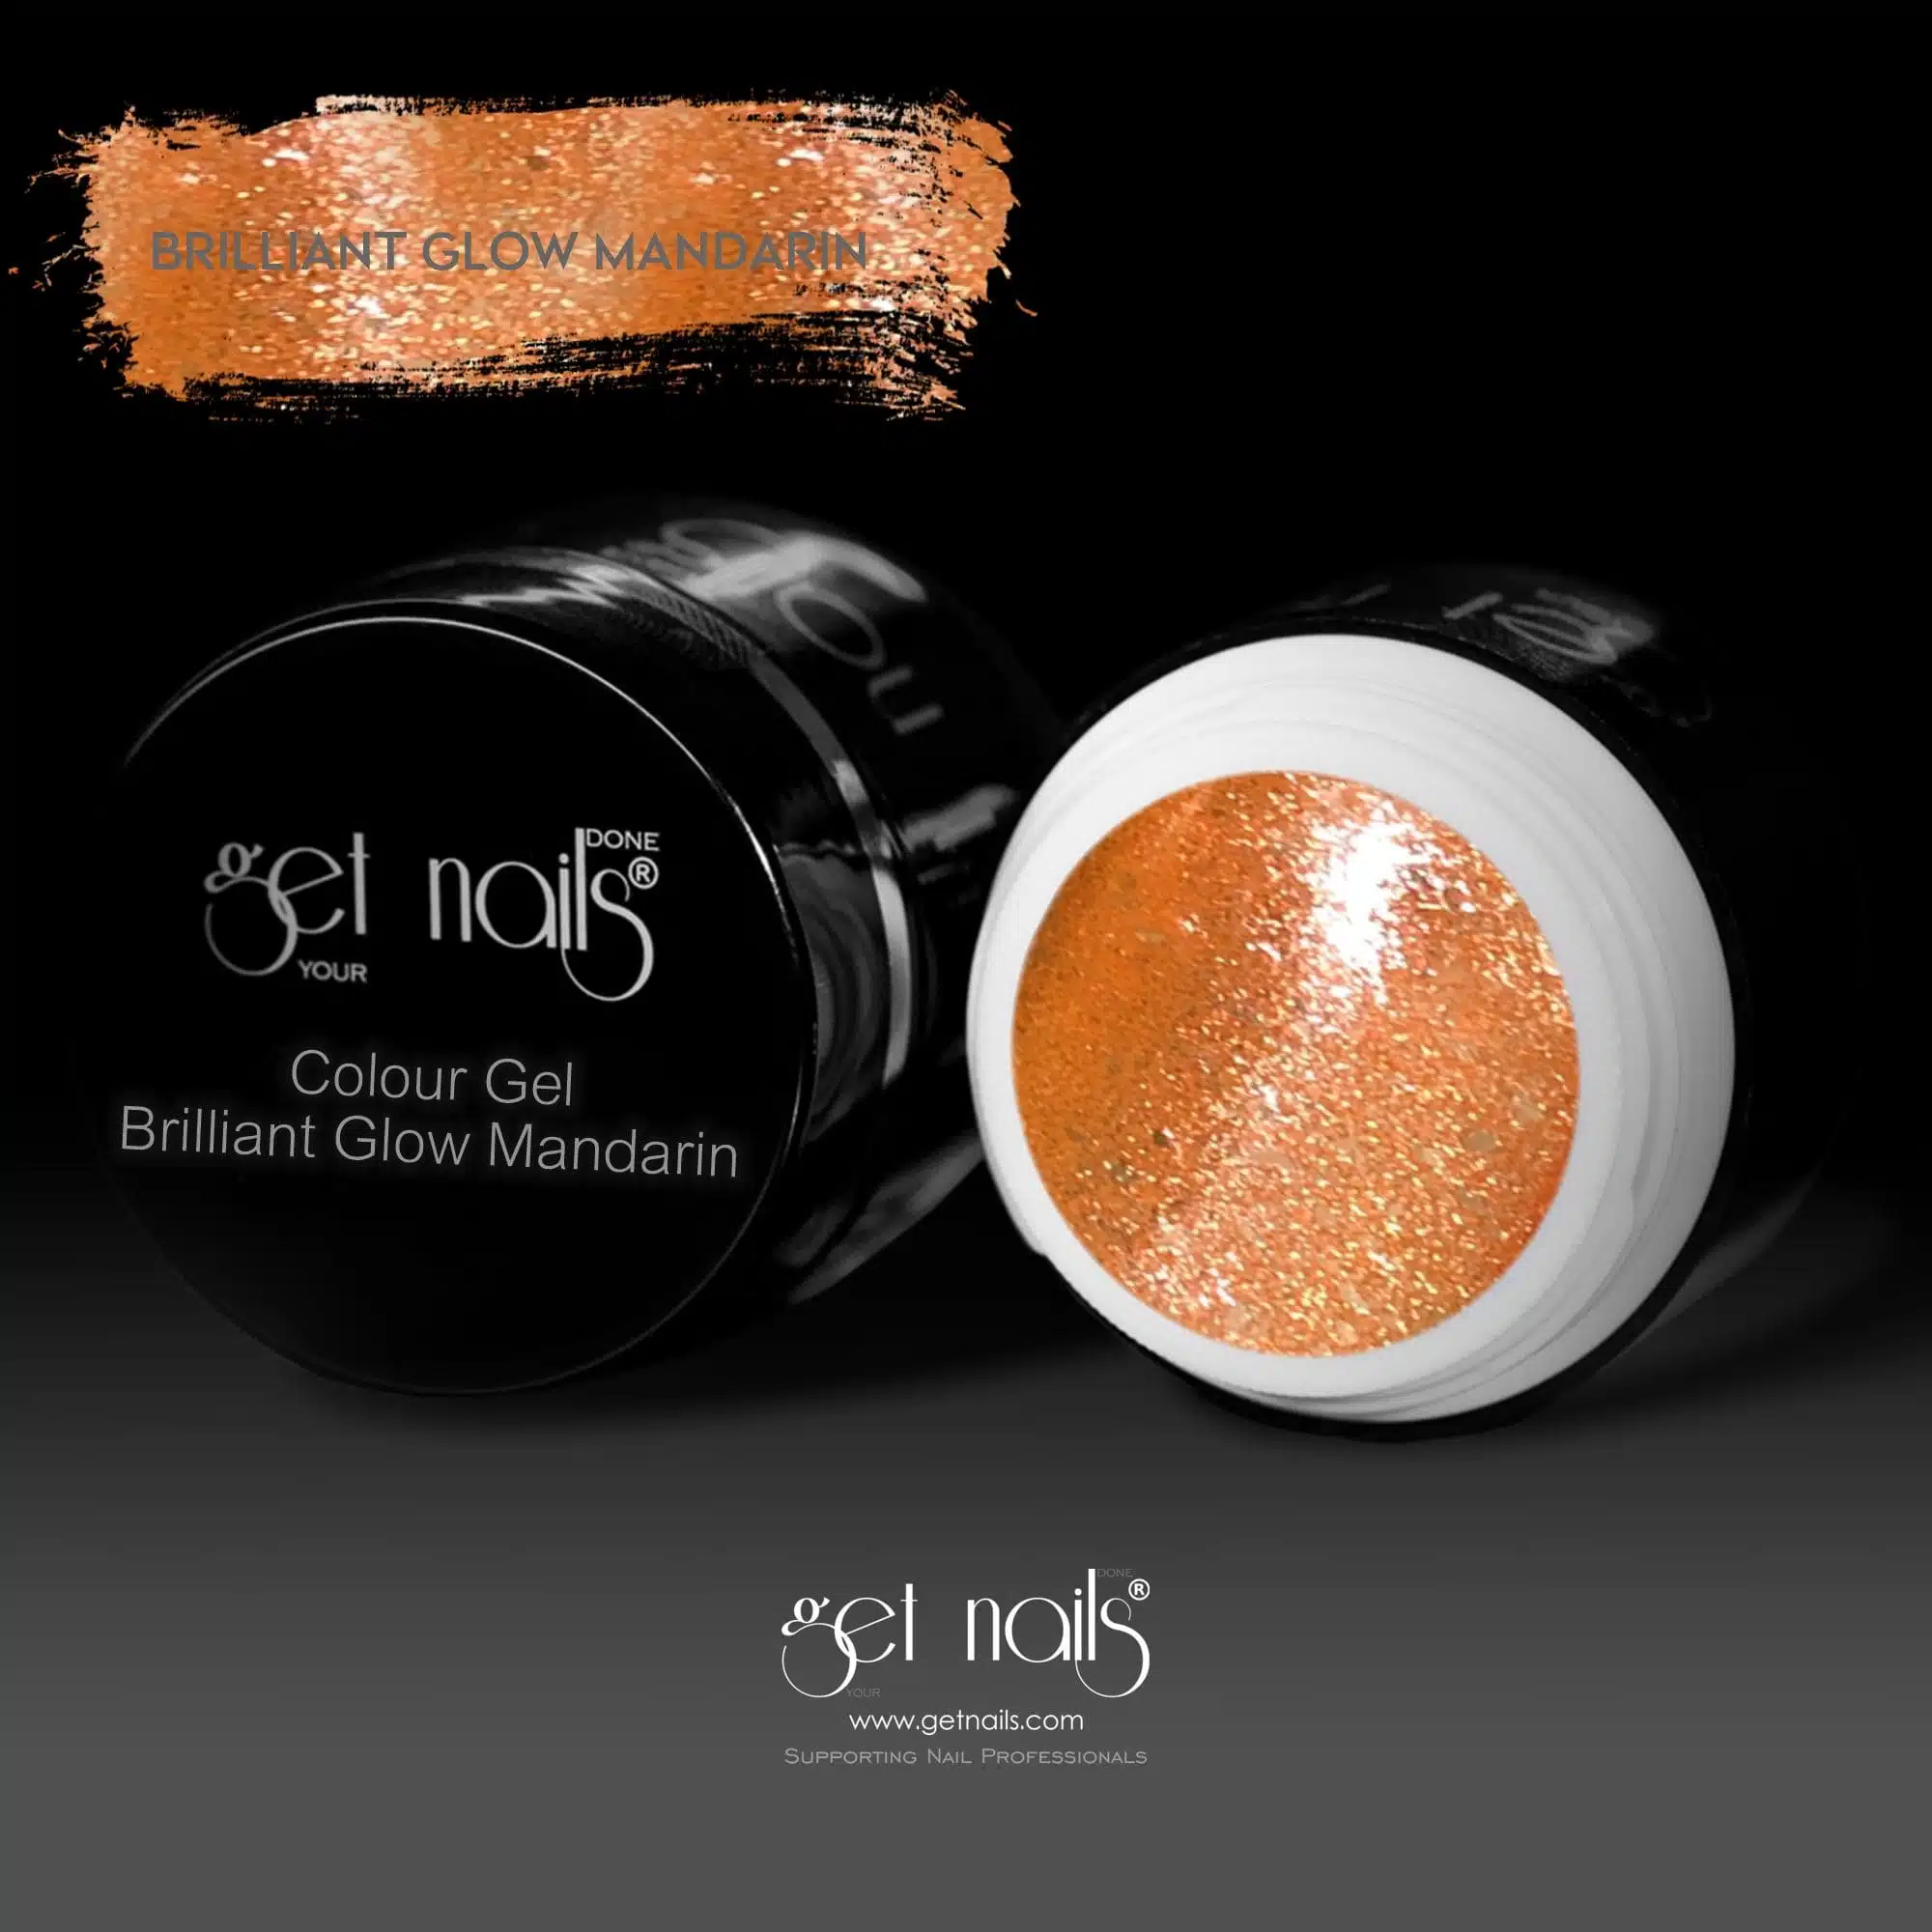 Get Nails Austria - Colour Gel Brilliant Glow Mandarin 5g